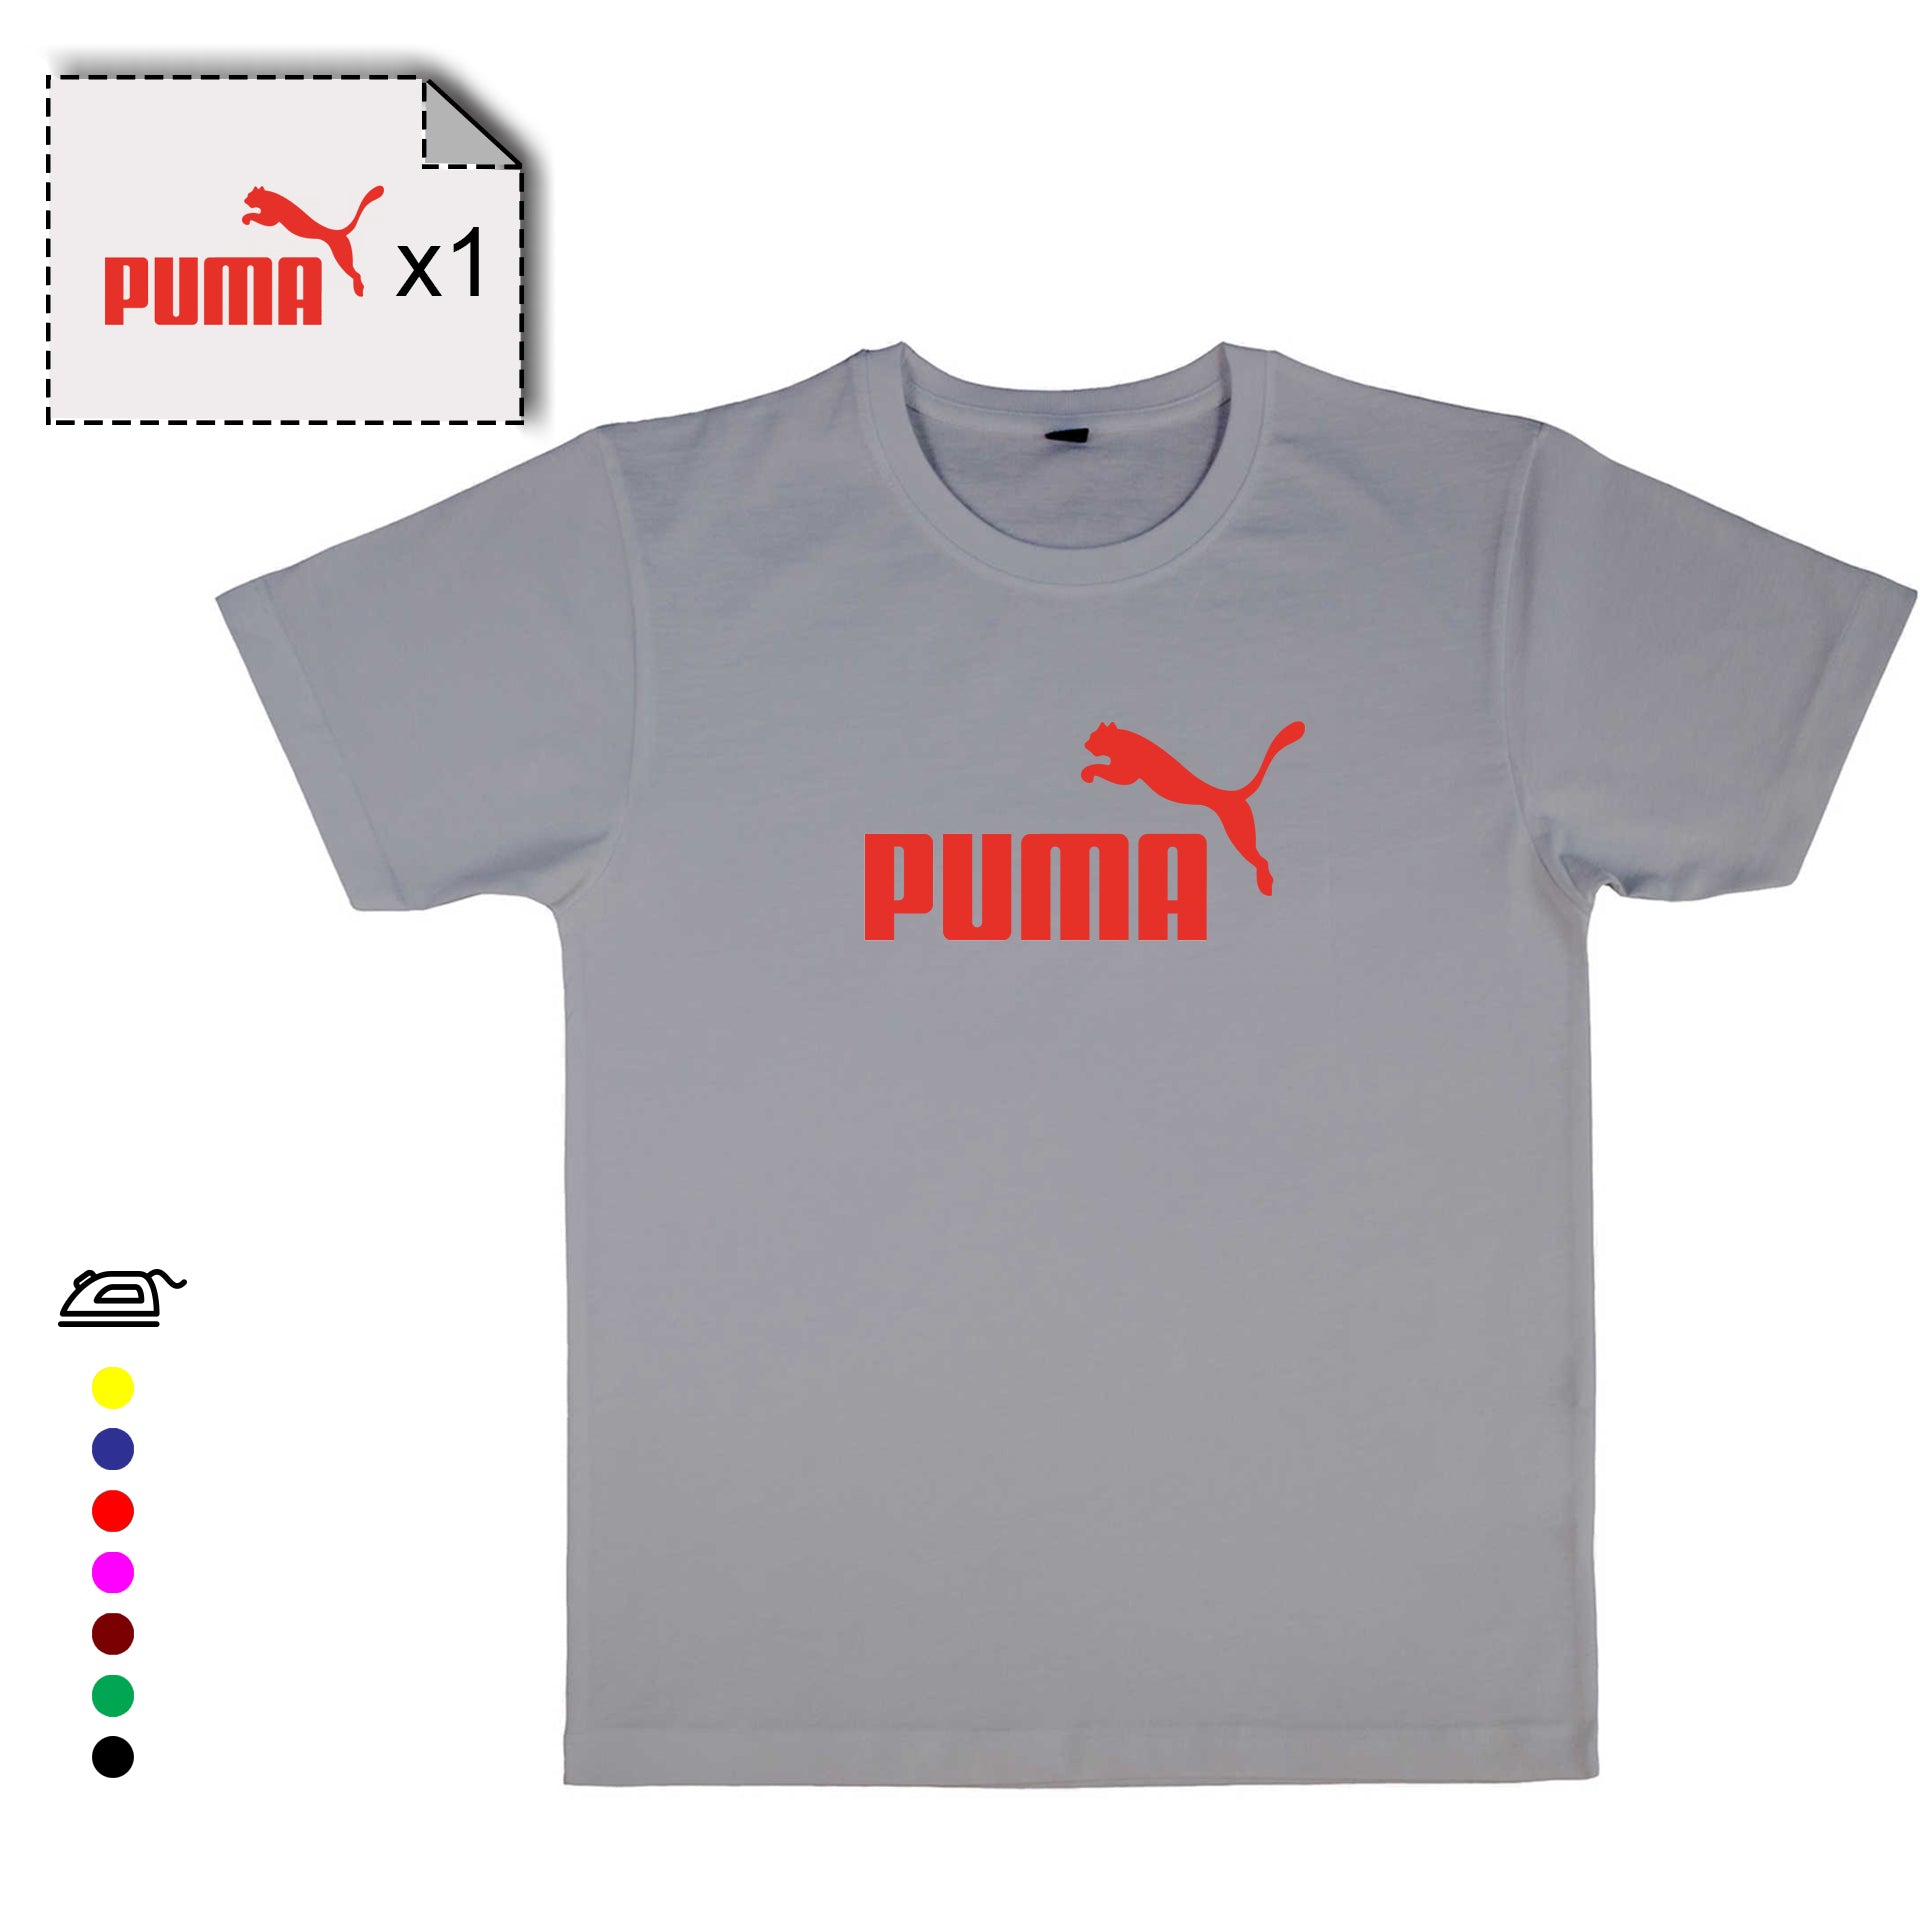 Sticker PUMA logo transfert thermocollant – Customisation Club